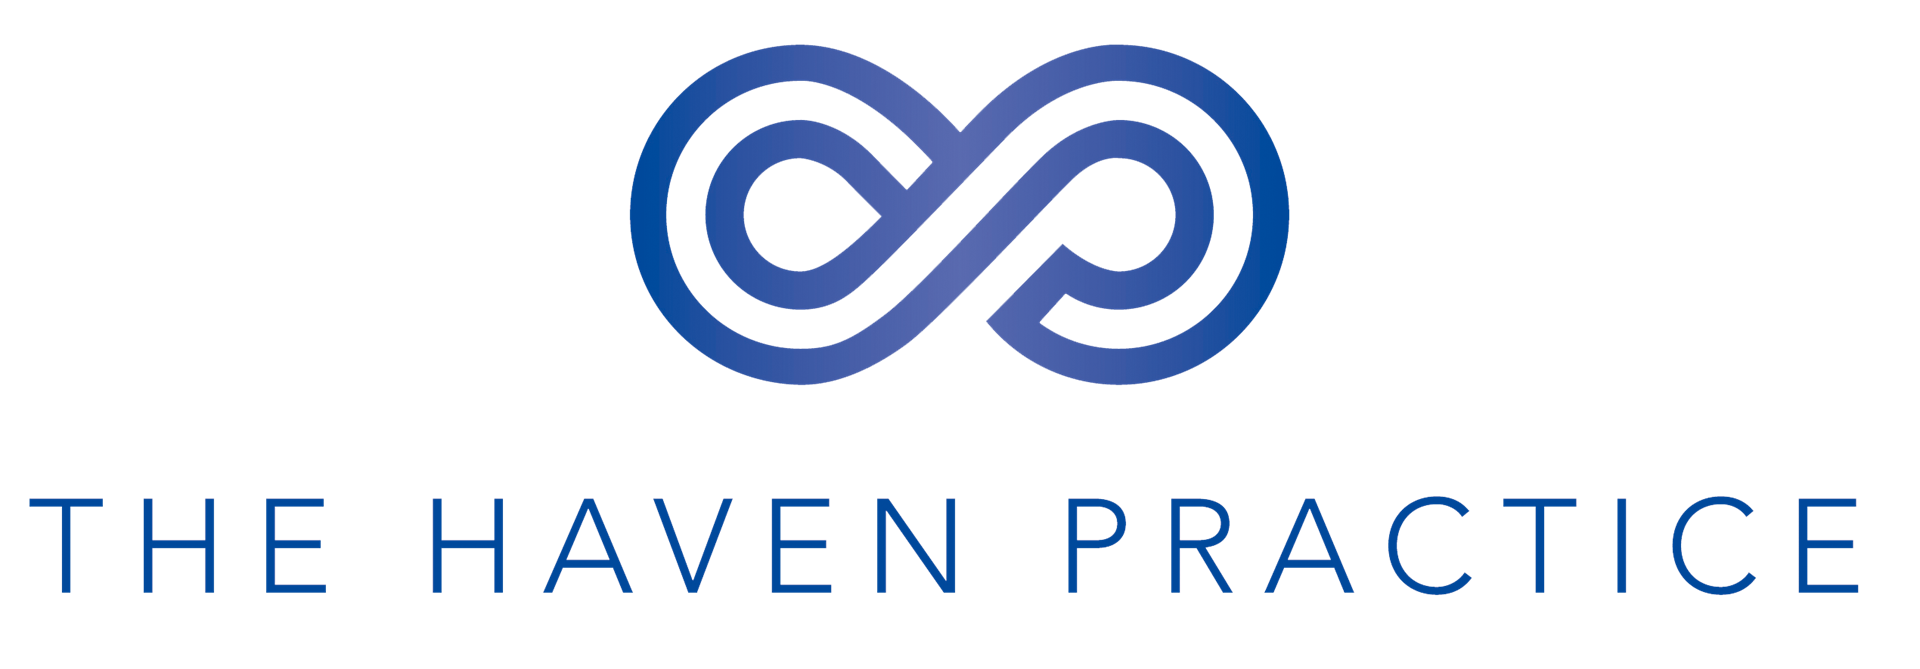 The Haven Practice Logo